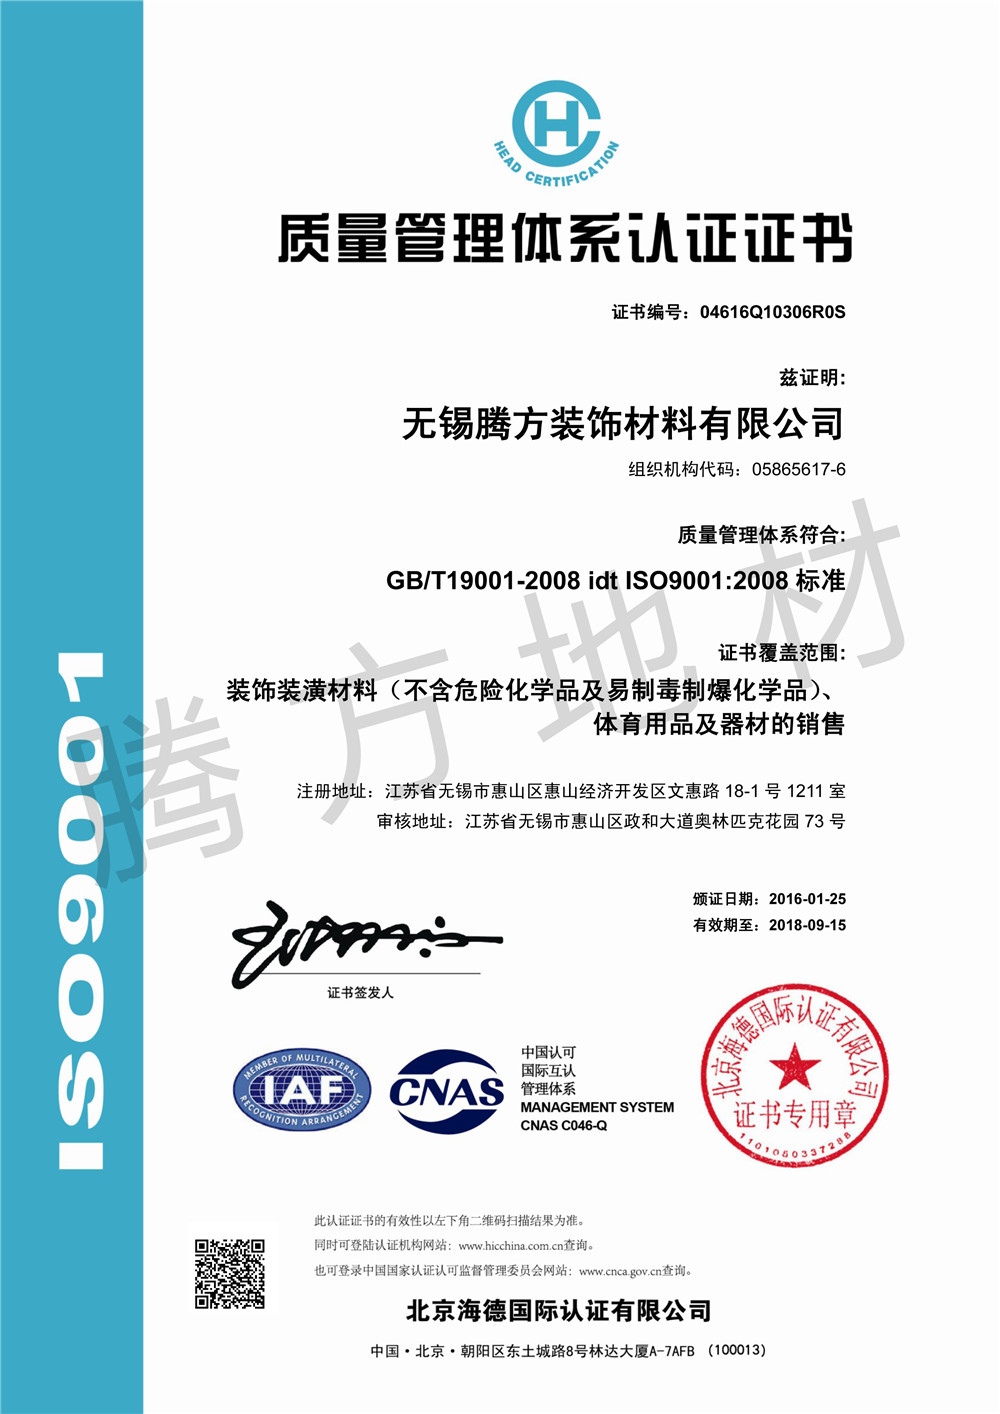 腾方通过ISO9001:2008质量管理体系认证